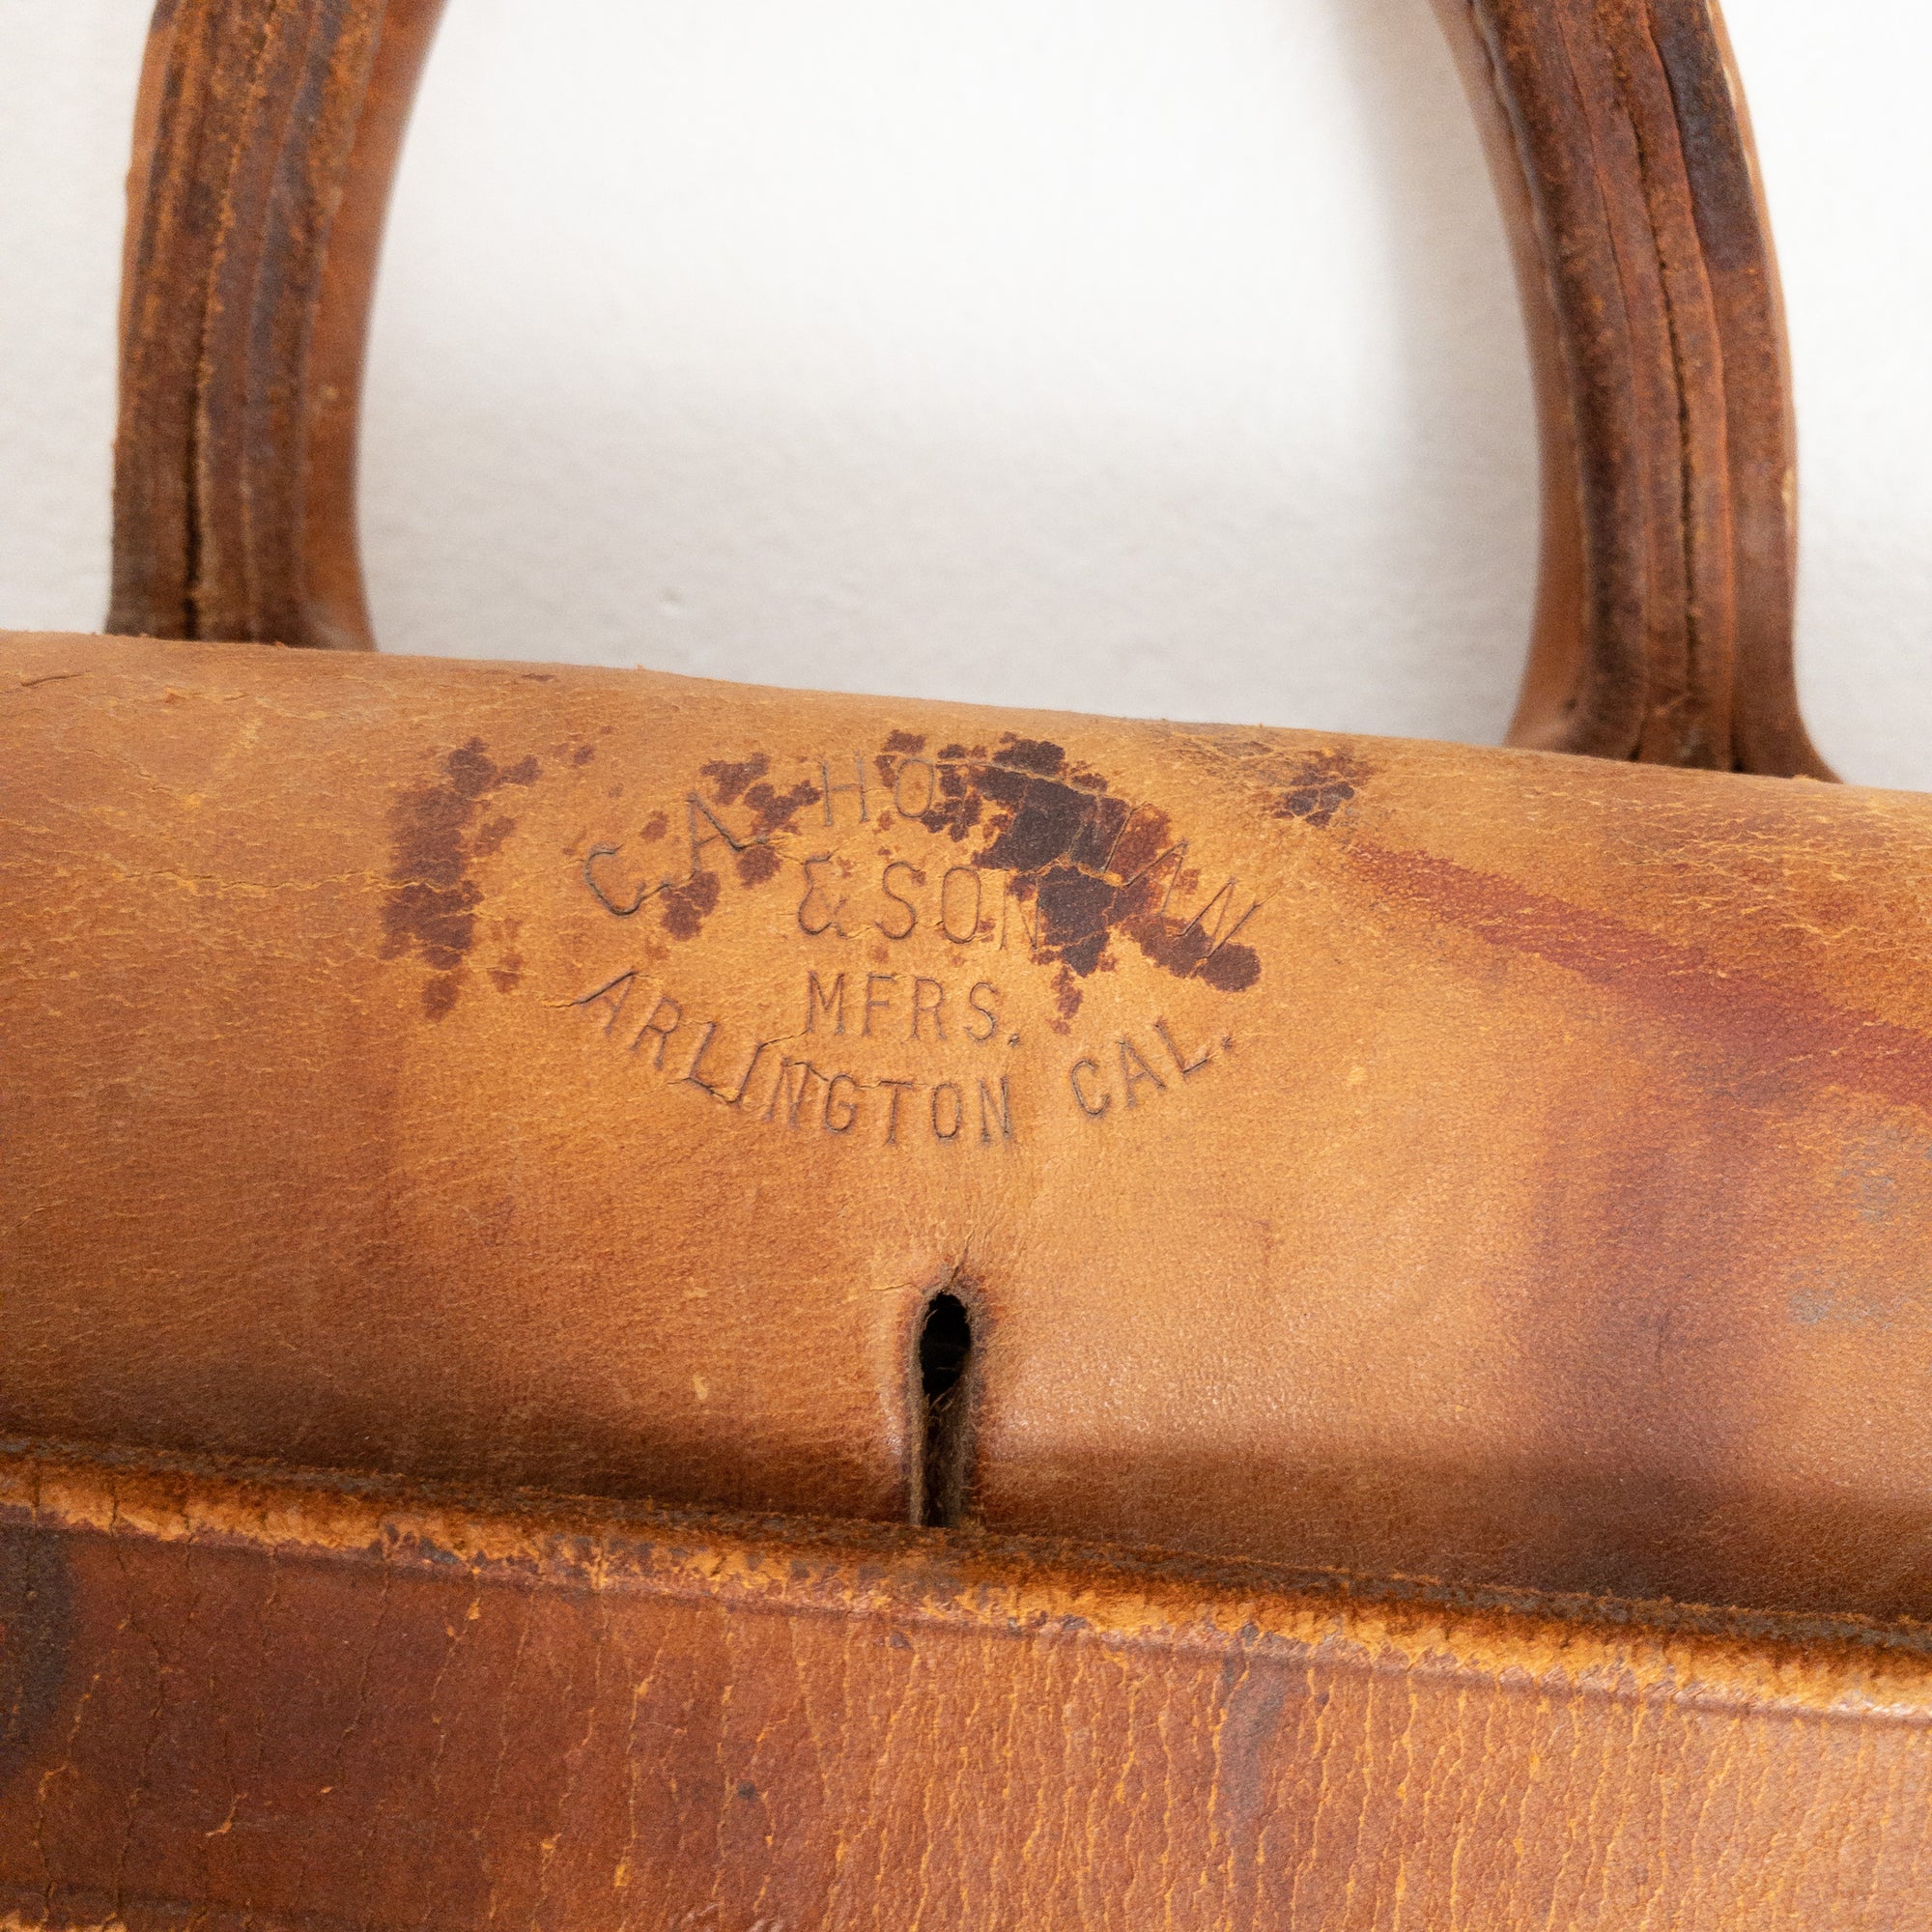 Antique Railway Canvas Leather Mail Bag